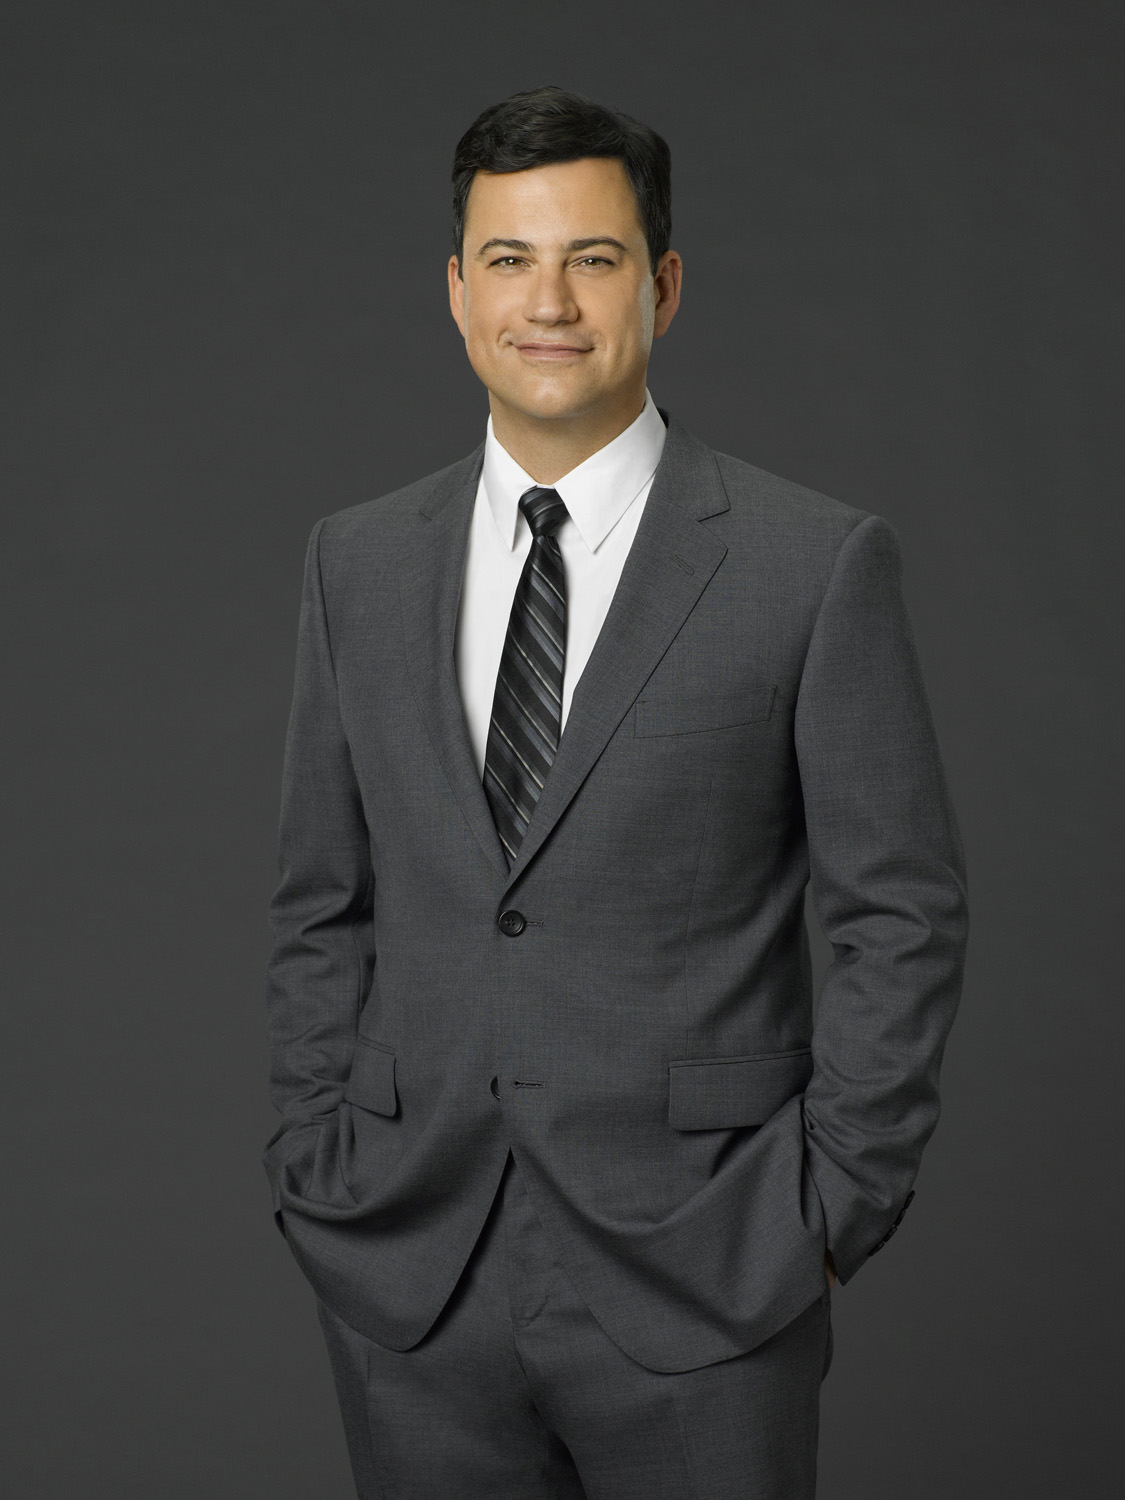 About Jimmy Kimmel - American Profile